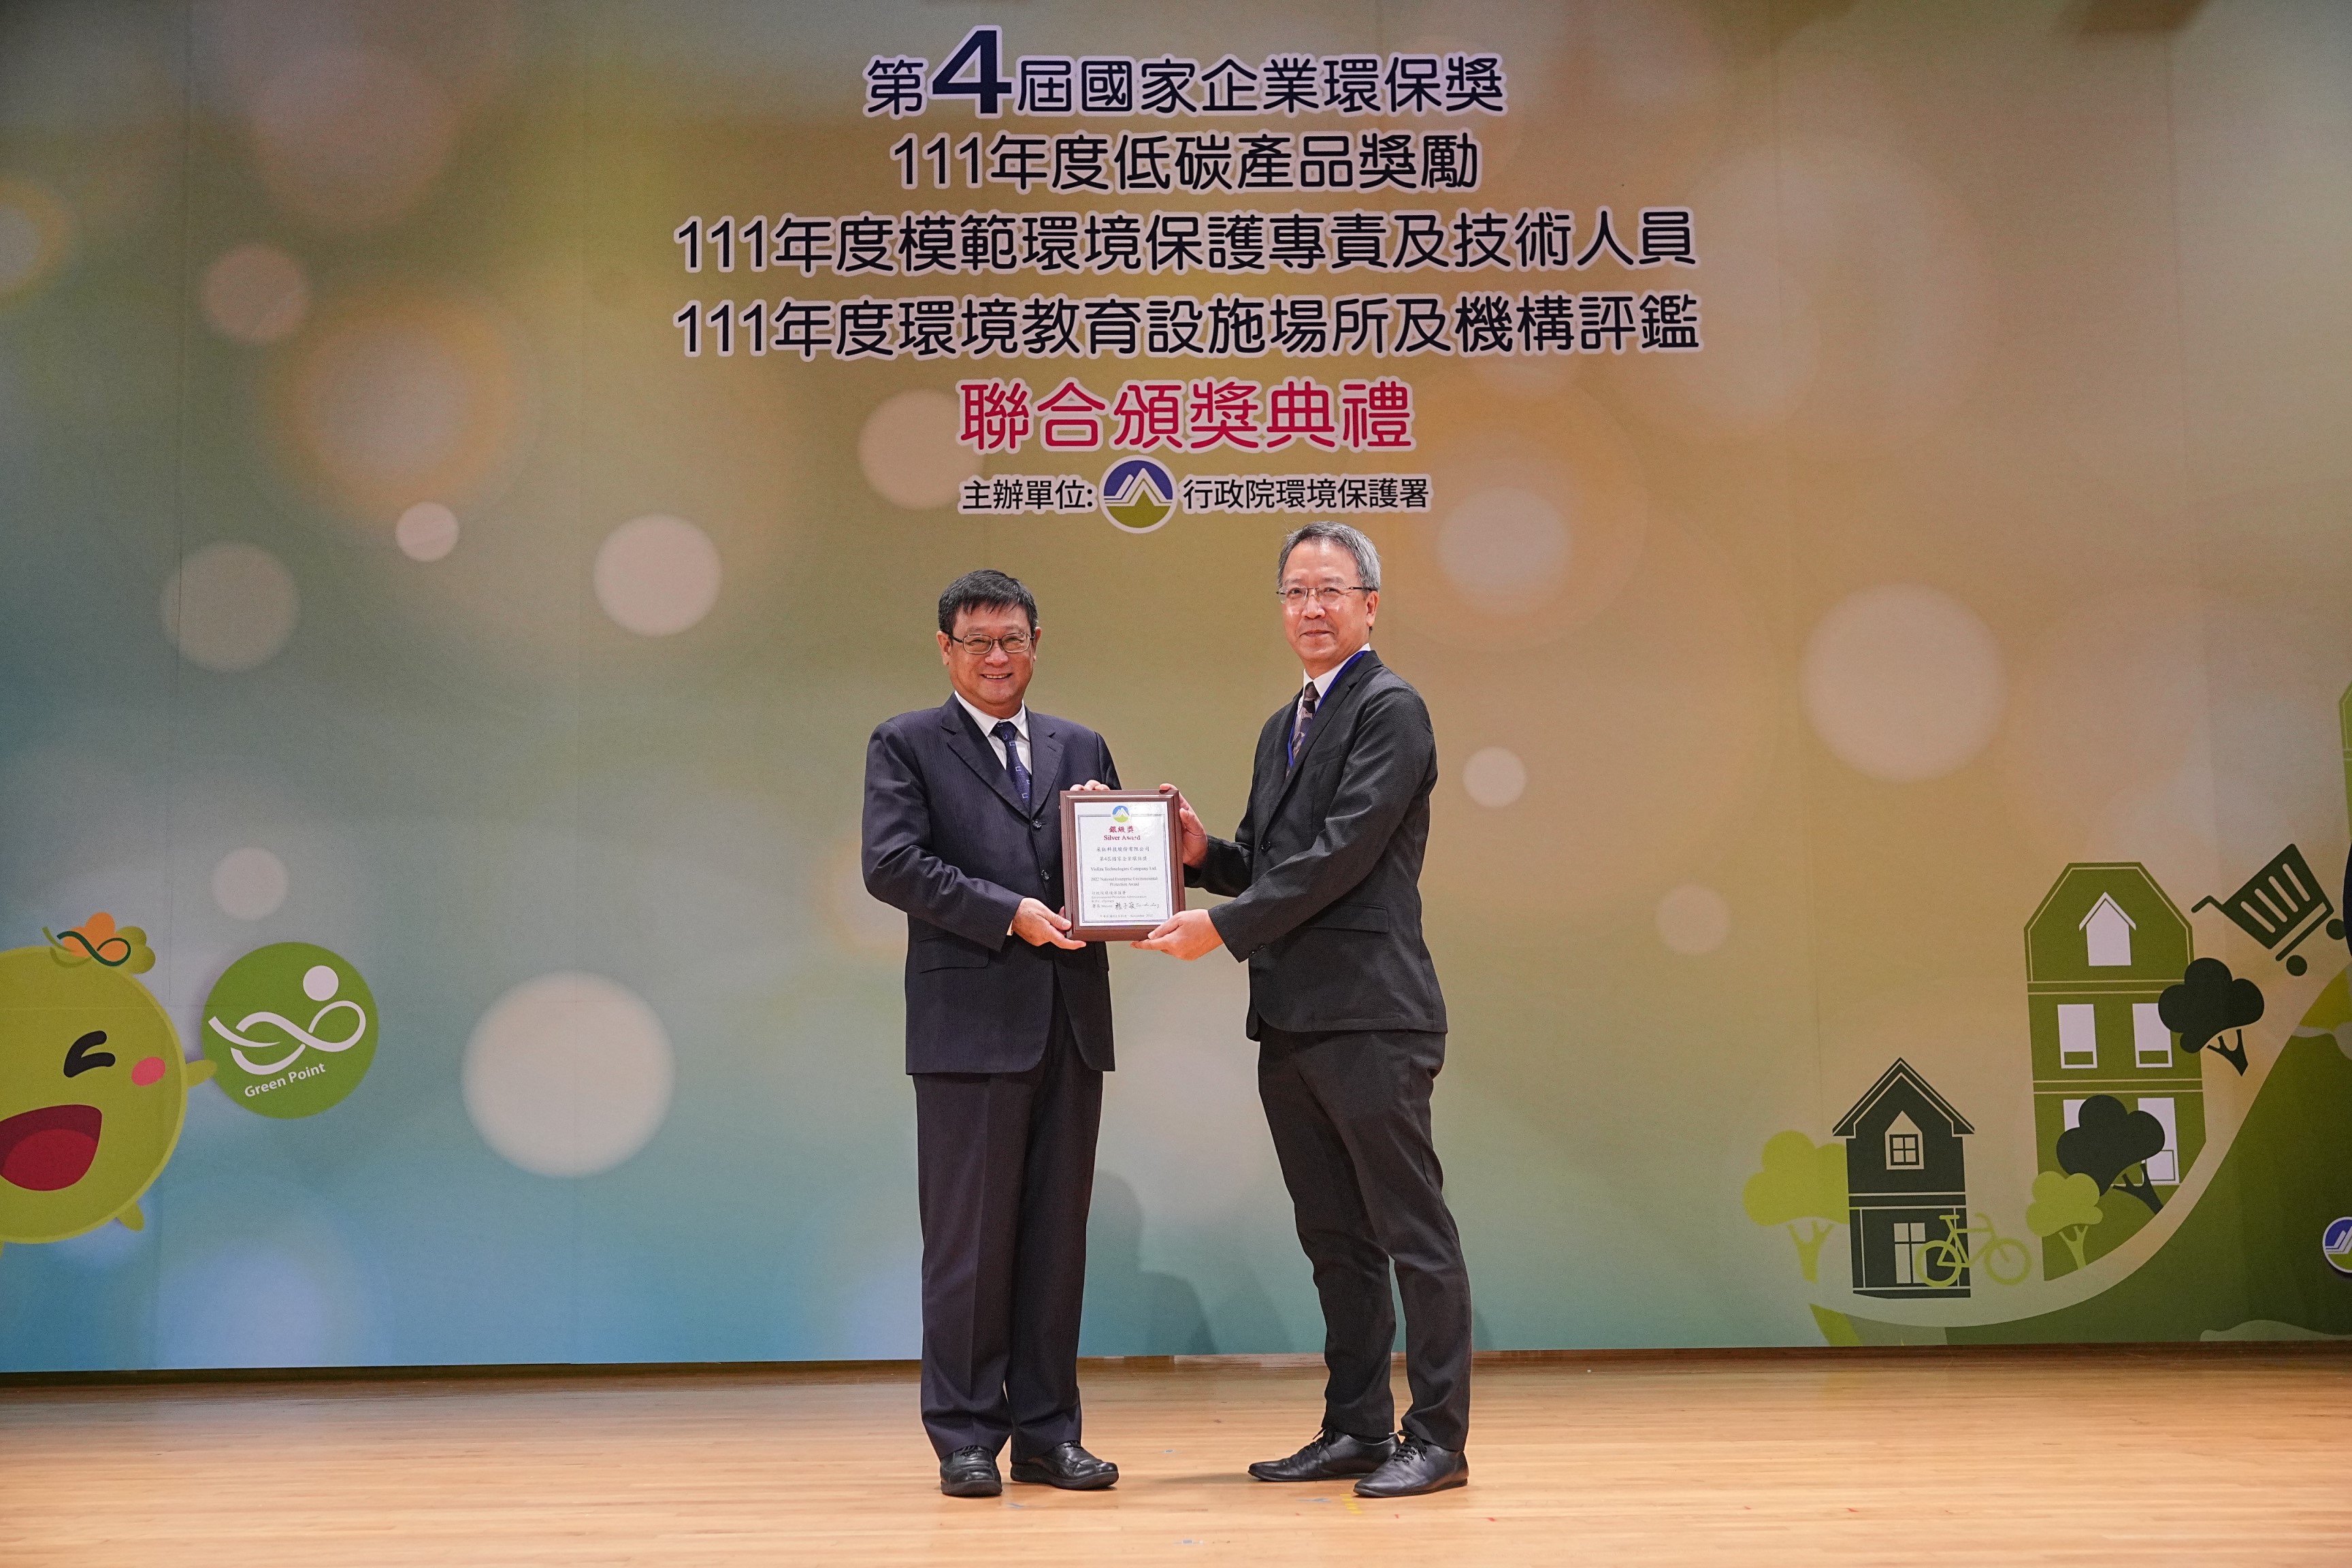 VisEra Recognized with Annual Enterprises Environmental Protection Silver Award